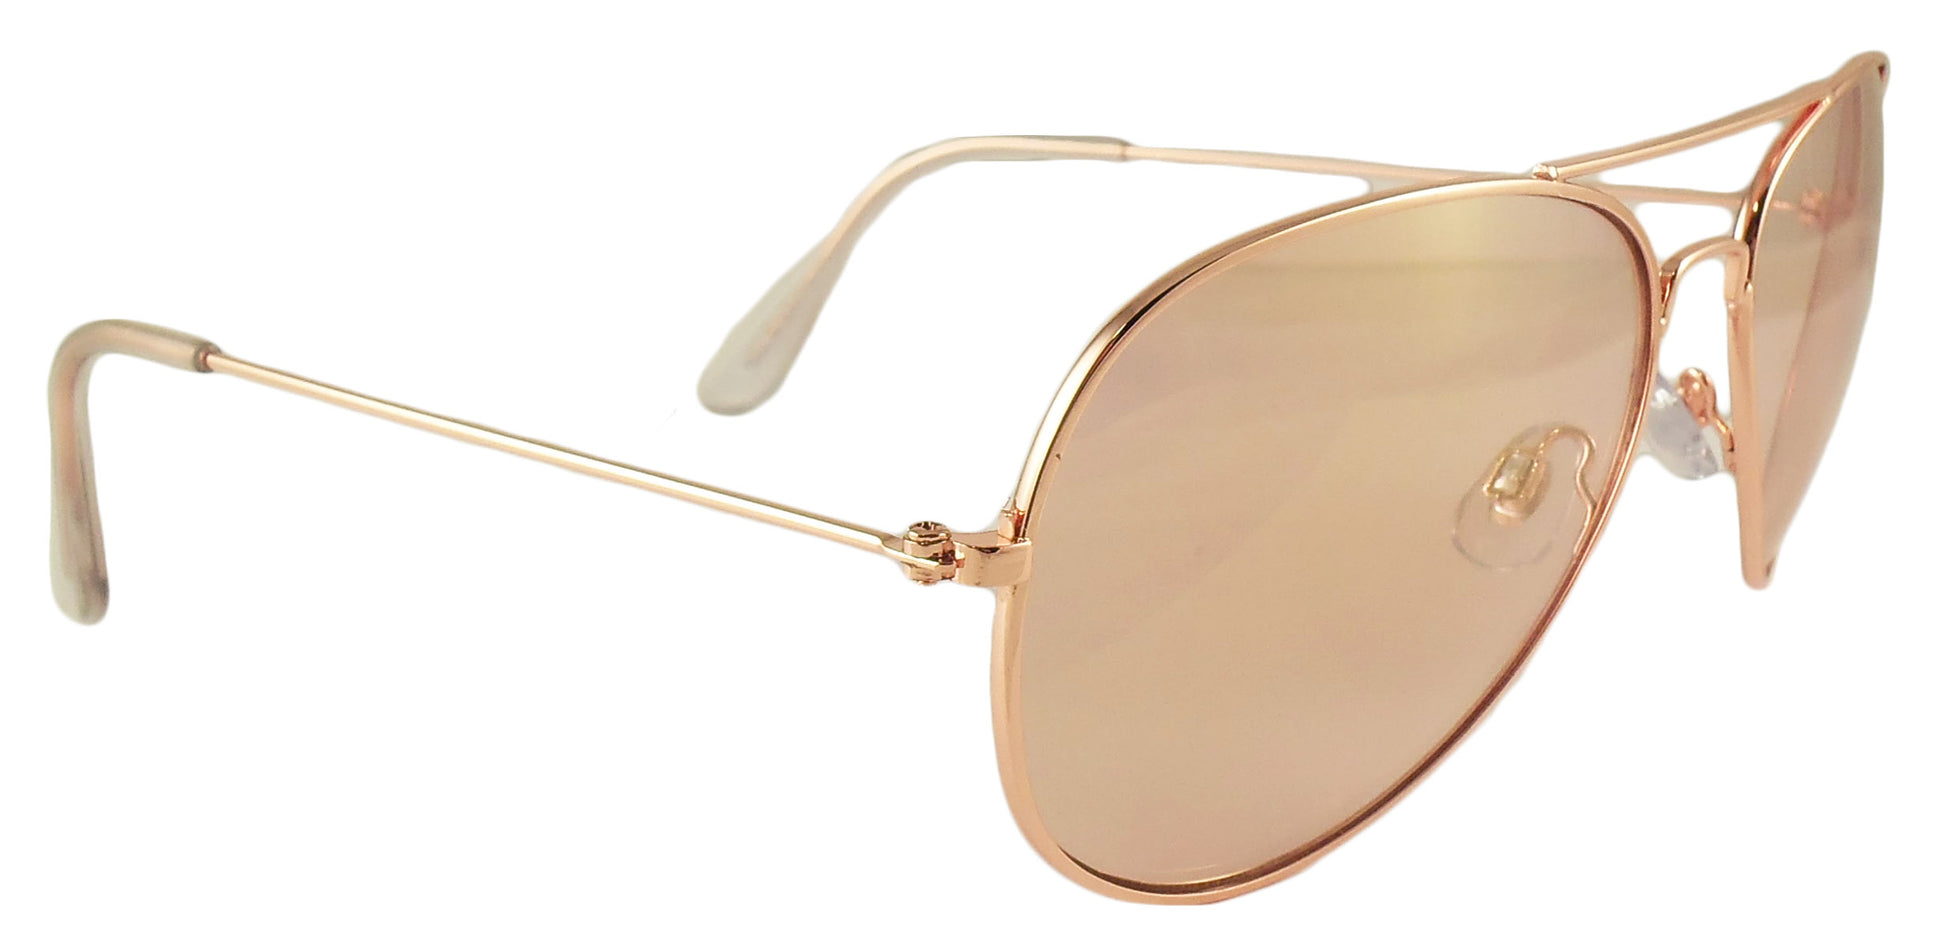 Rose Gold Aviator Sunglasses - Pink Tinted Lens - Metal Frame Retro Style - UV400 Protection - Ideal Eyewear